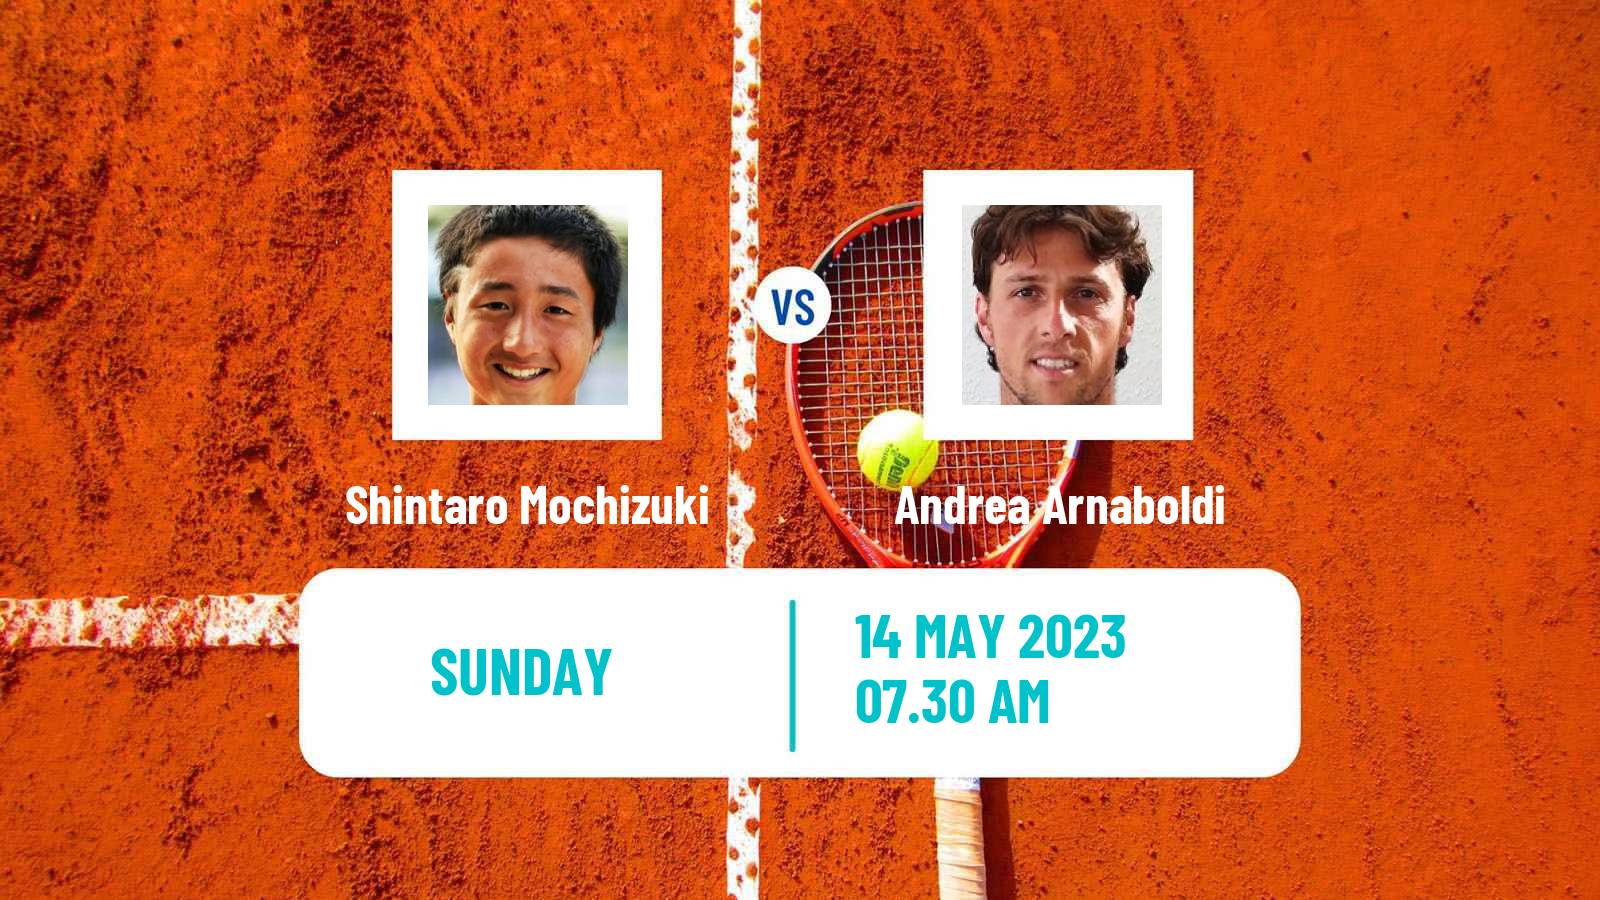 Tennis ATP Challenger Shintaro Mochizuki - Andrea Arnaboldi